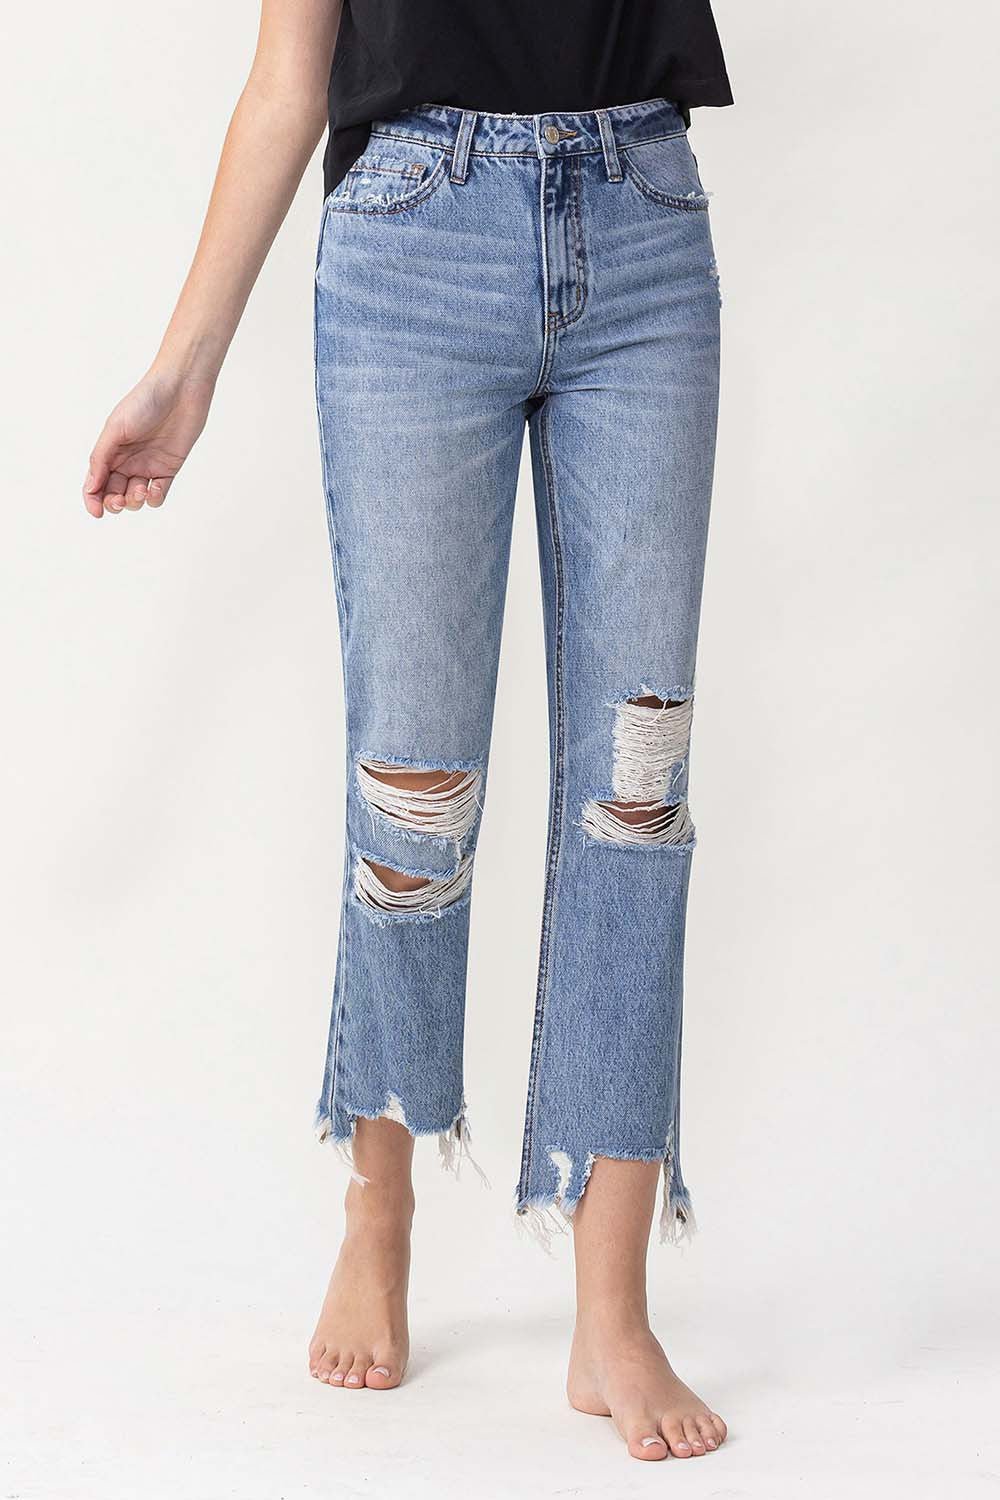 Medium Wash High Rise Distressed Crop JeansJeansLovervet